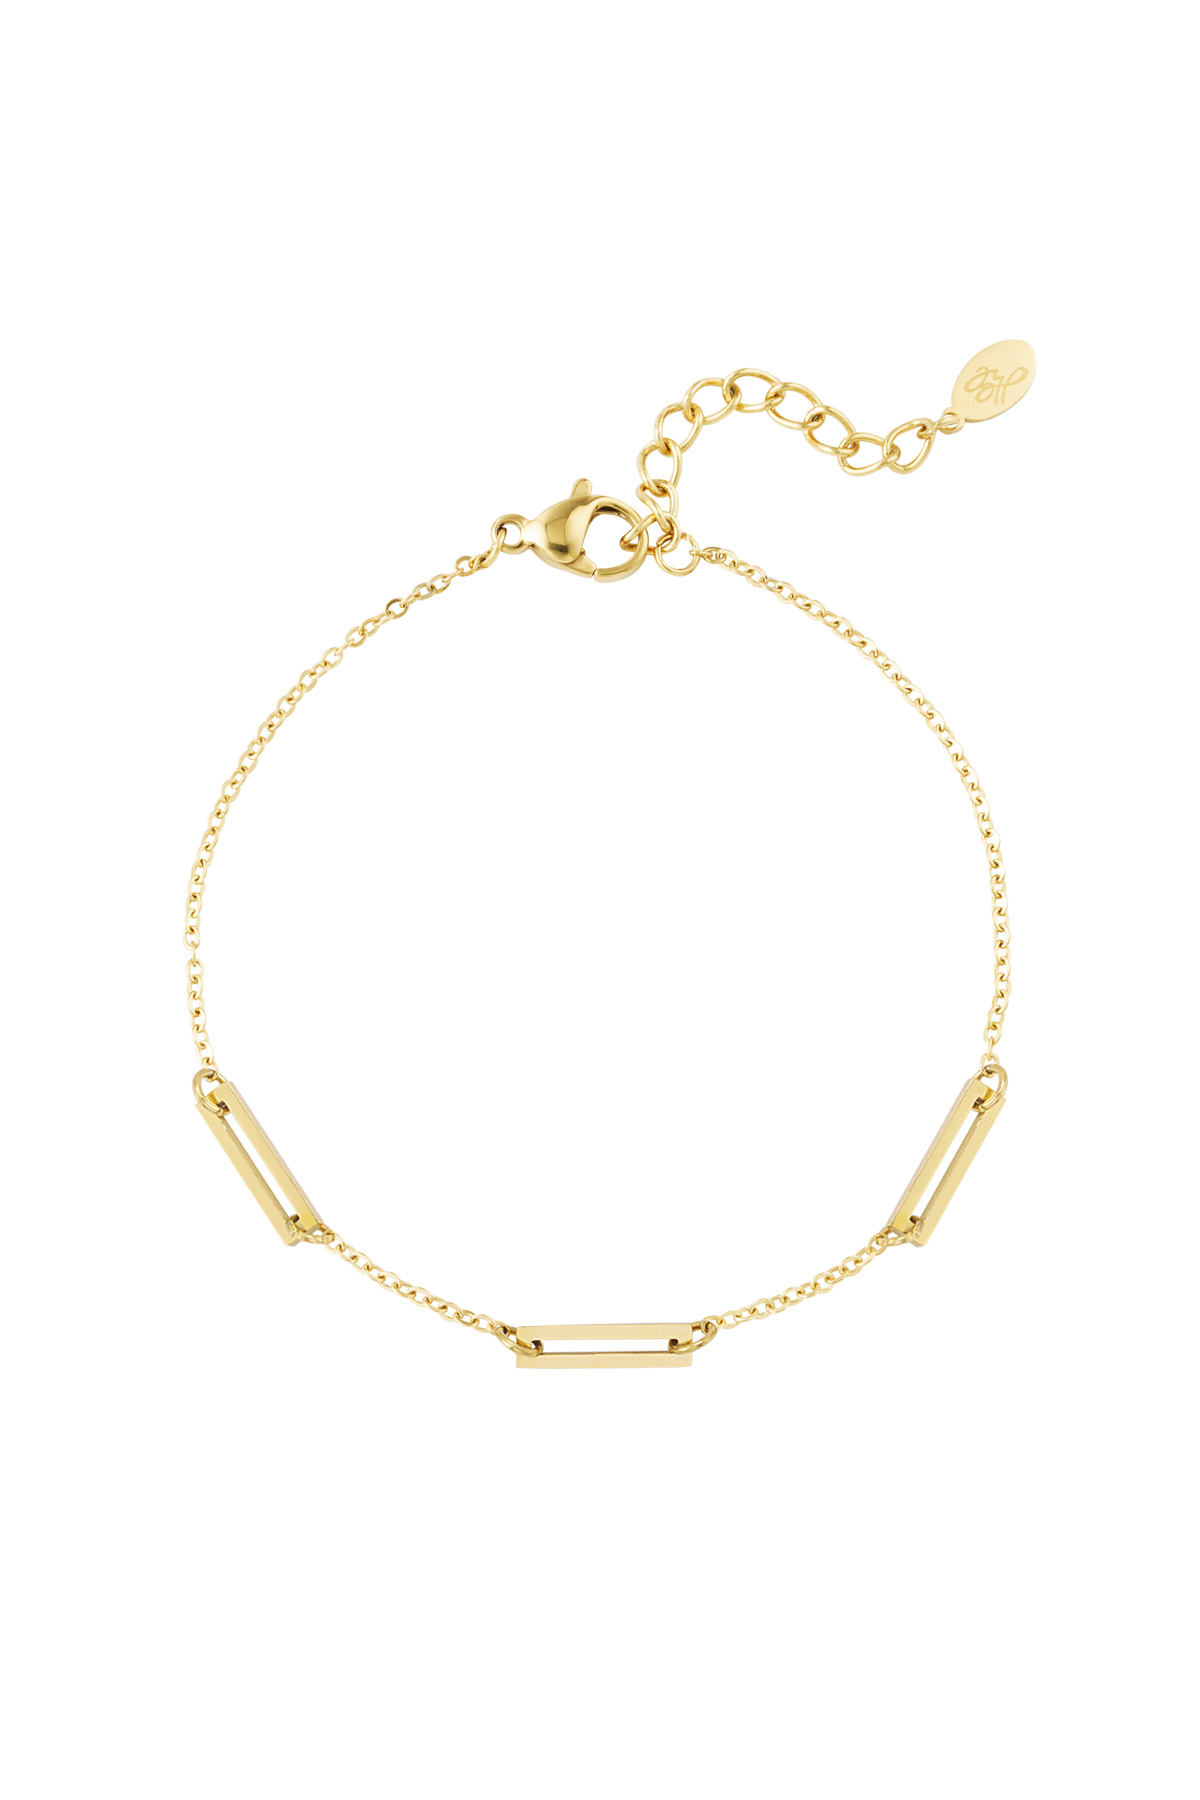 Bracelet three links - gold 